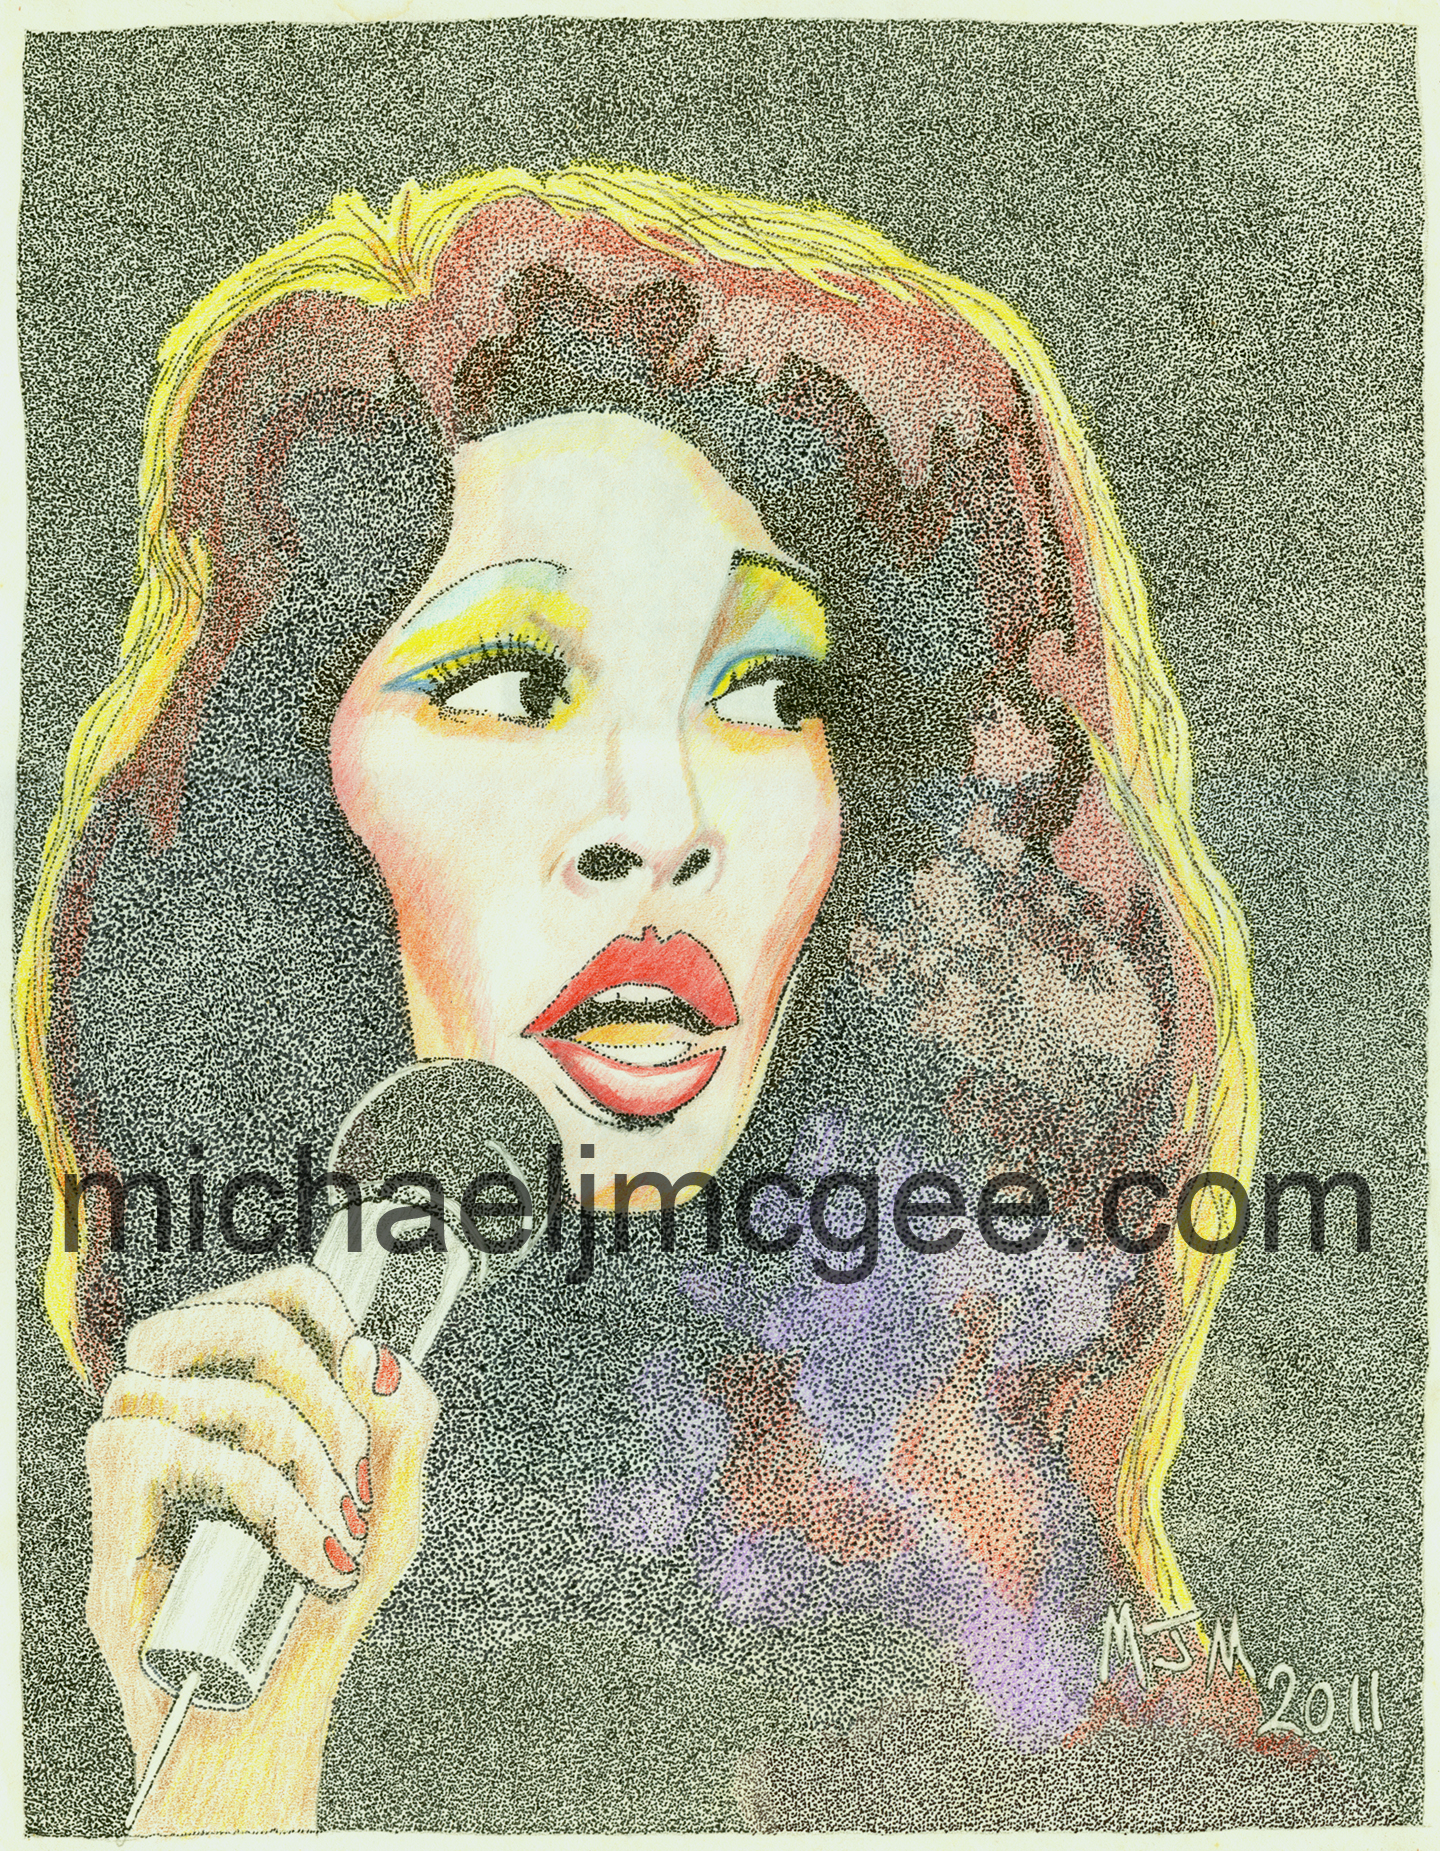 Donna Summer / MJM Artworks / michaeljmcgee.com